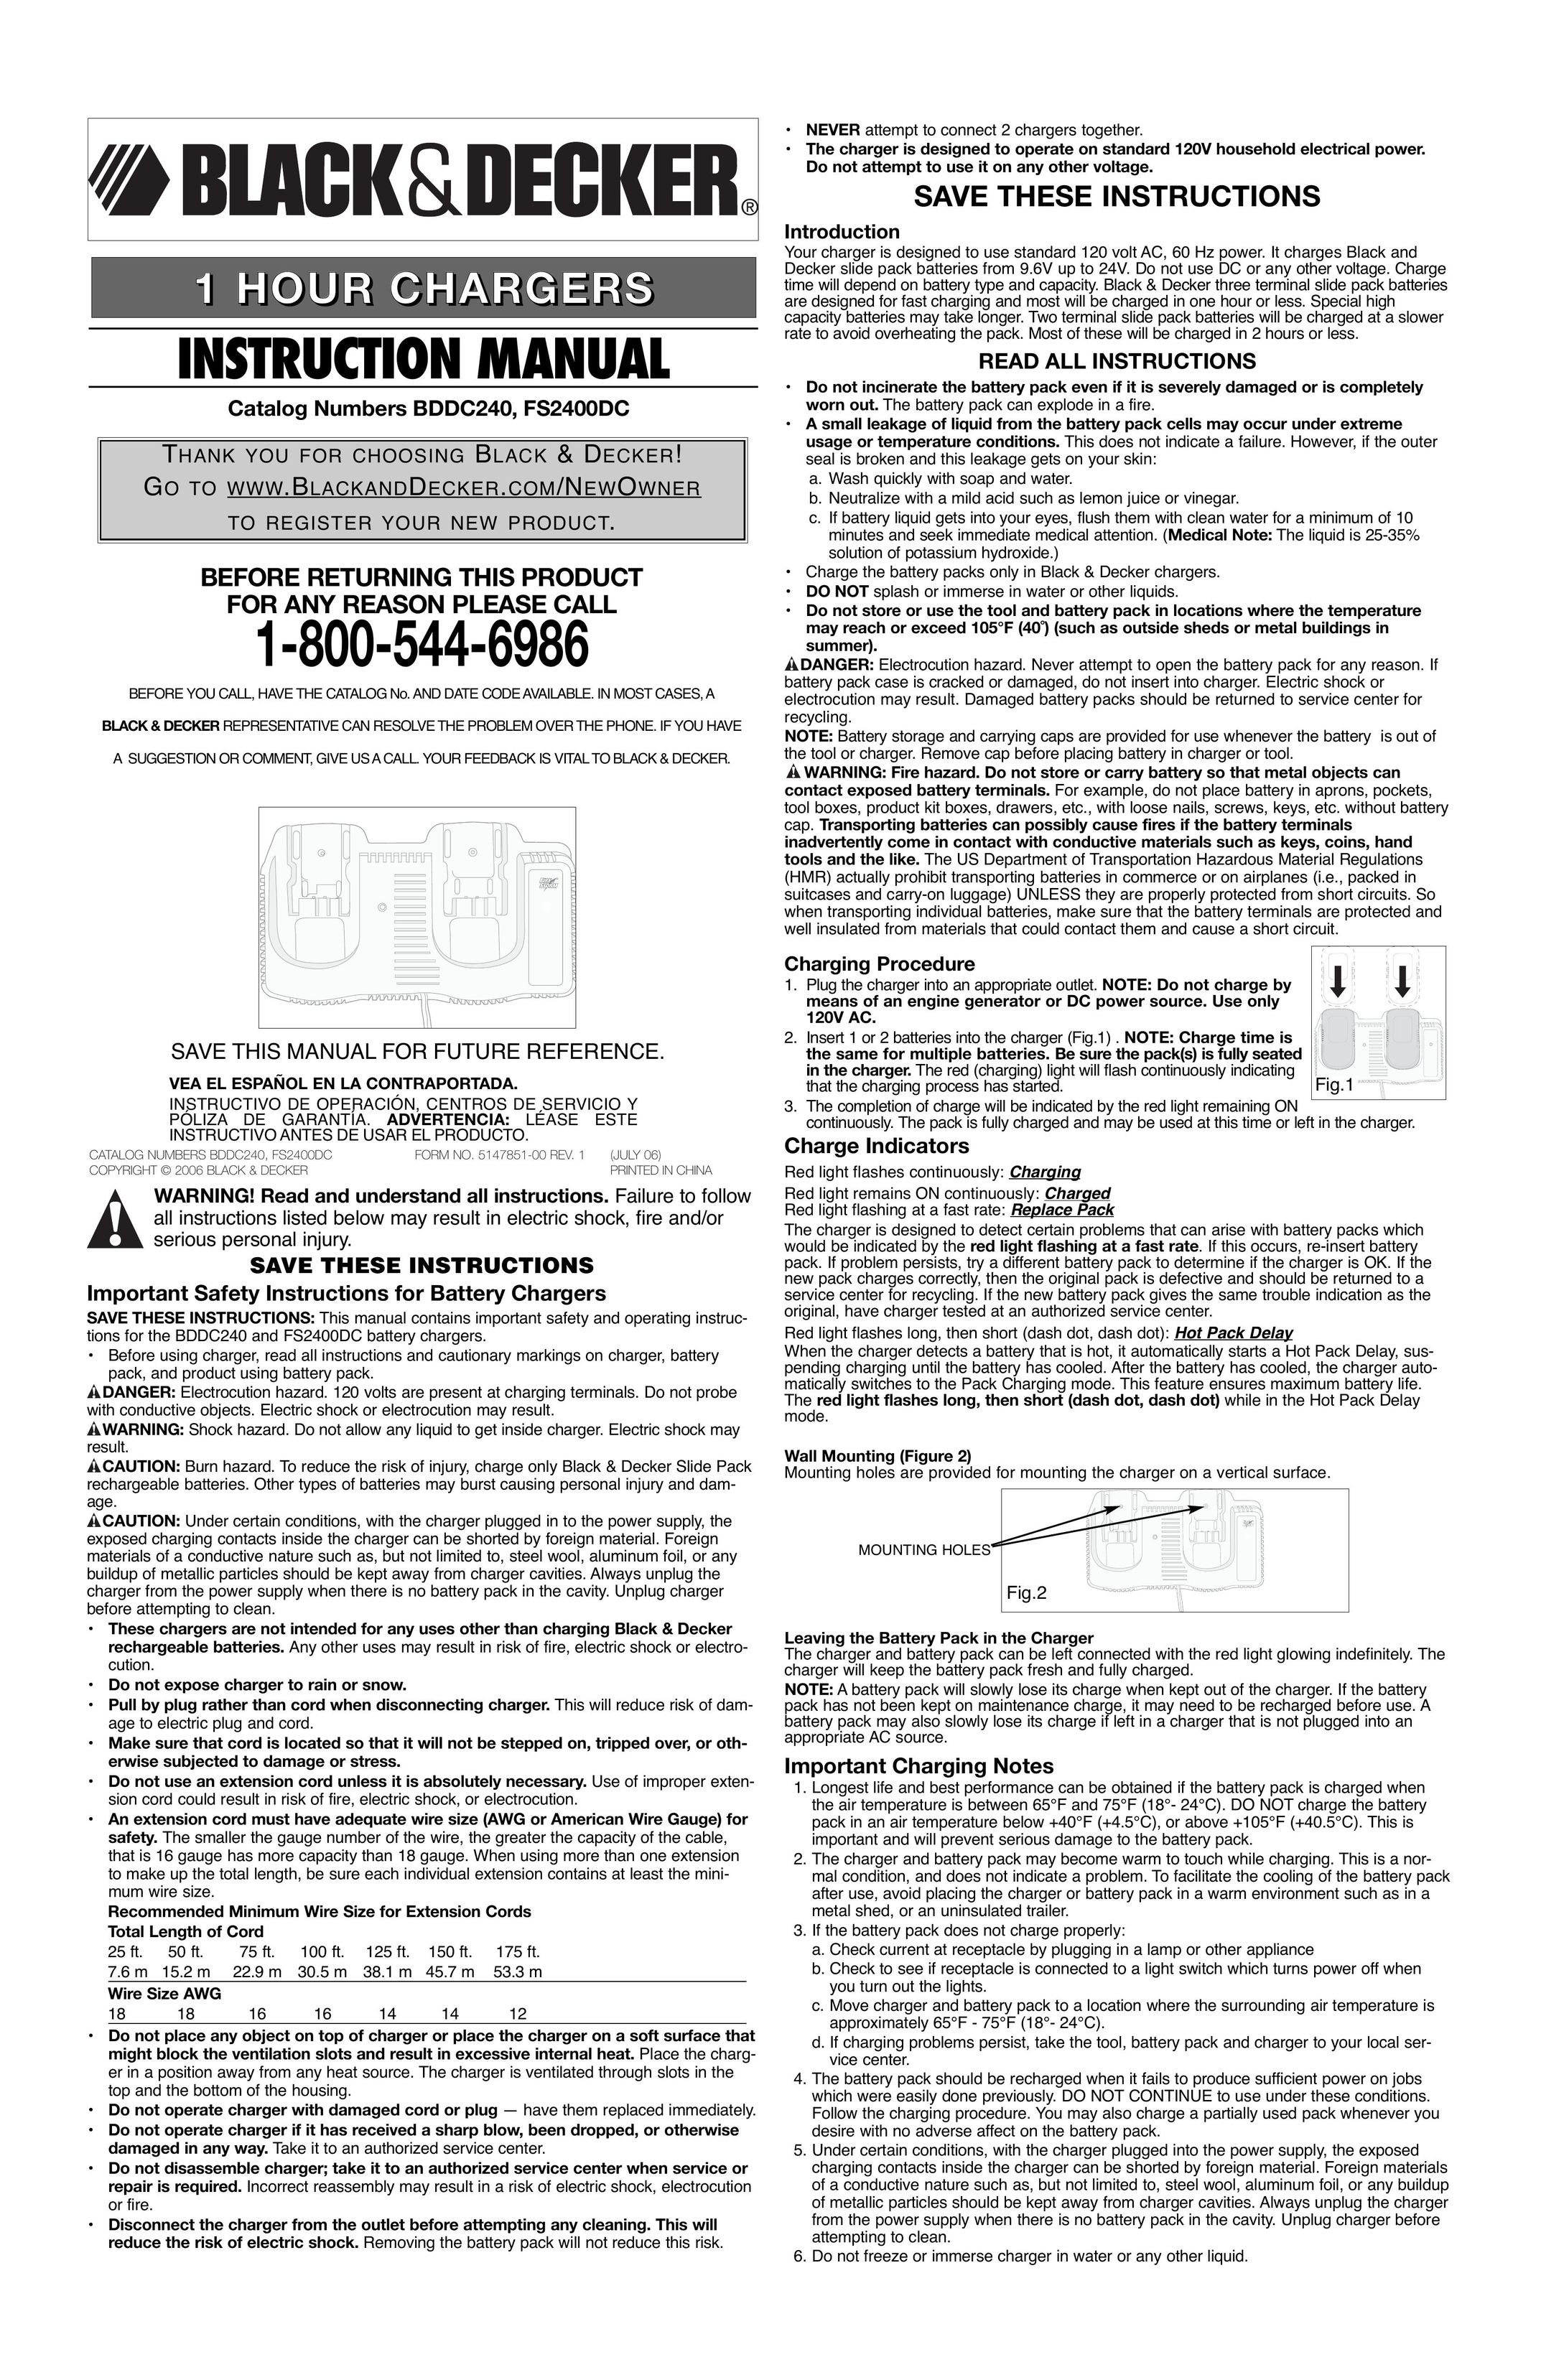 Black & Decker BDDC240 Battery Charger User Manual